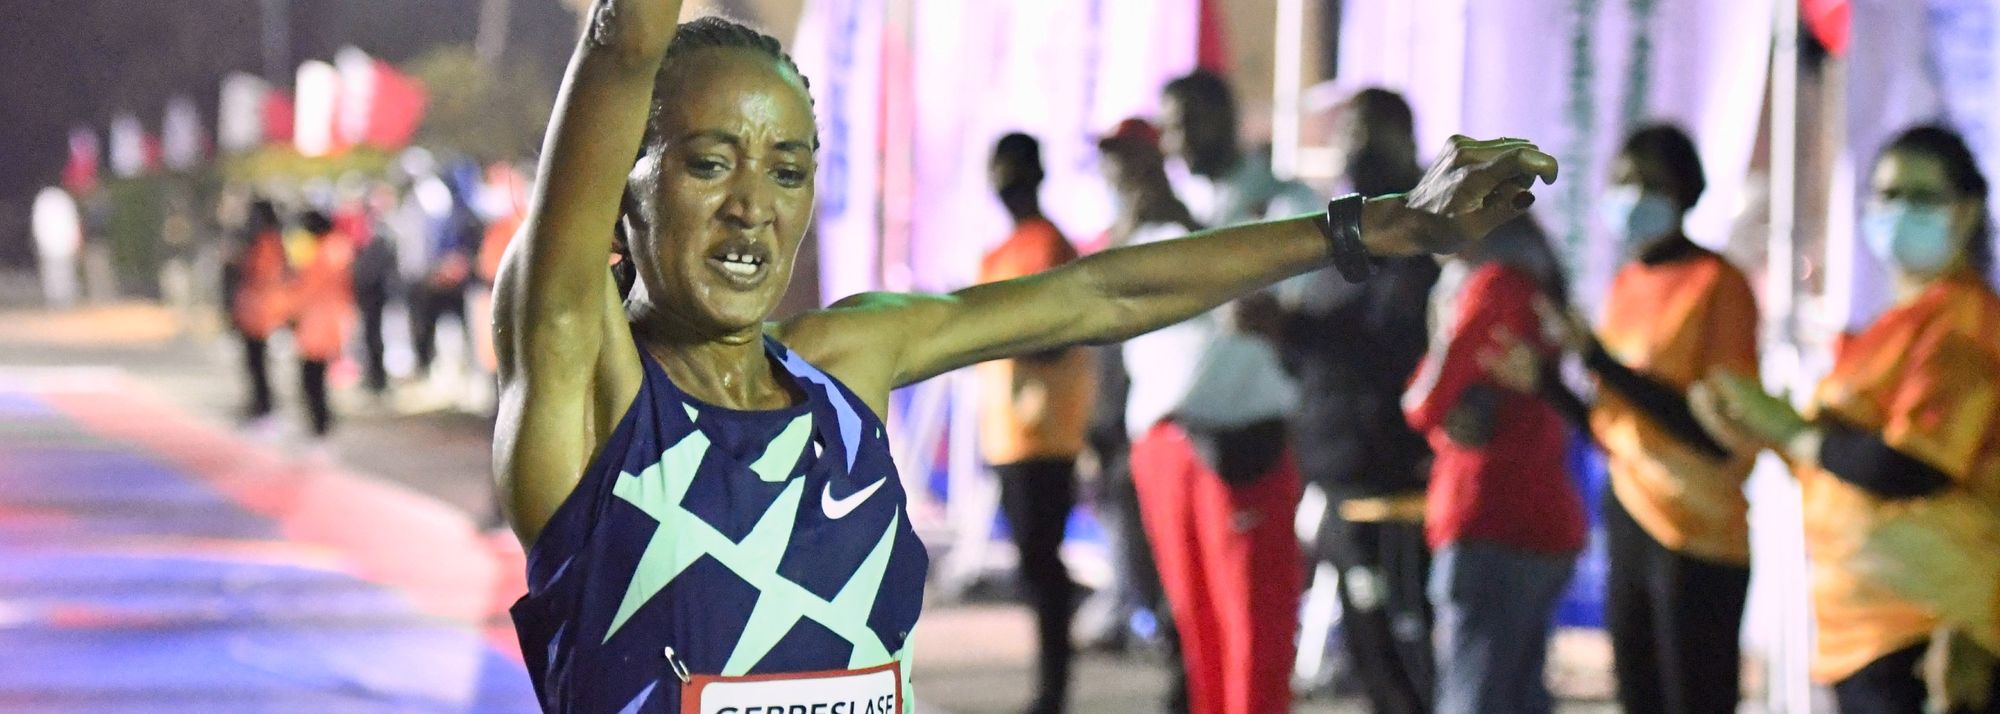 Ethiopia’s Gotytom Gebreslase and Kenya’s Philemon Kiplimo claimed victory at the World Athletics Label road race.